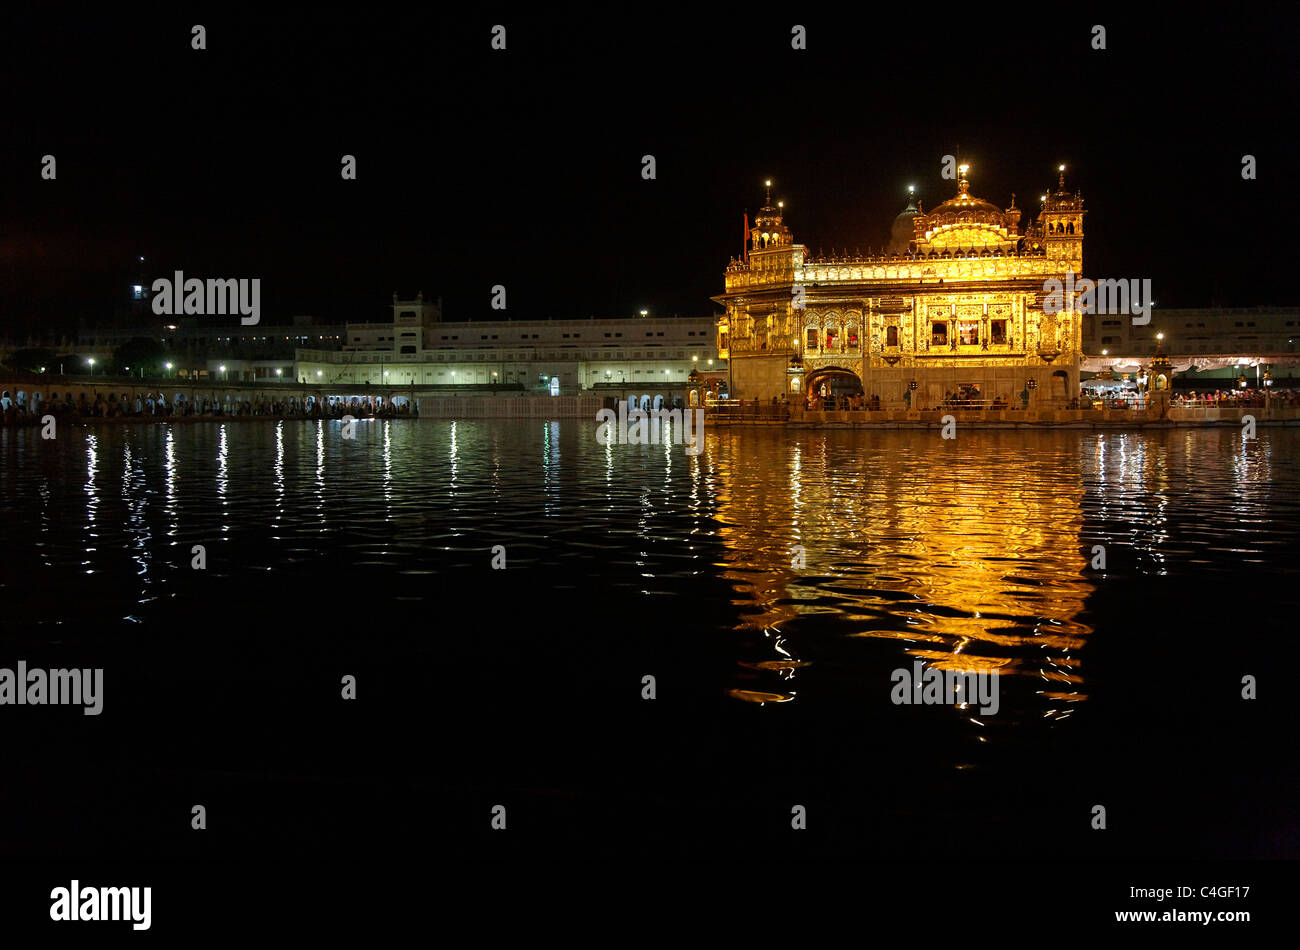 India - Punjab - Amritsar - the Golden Temple at night Stock Photo